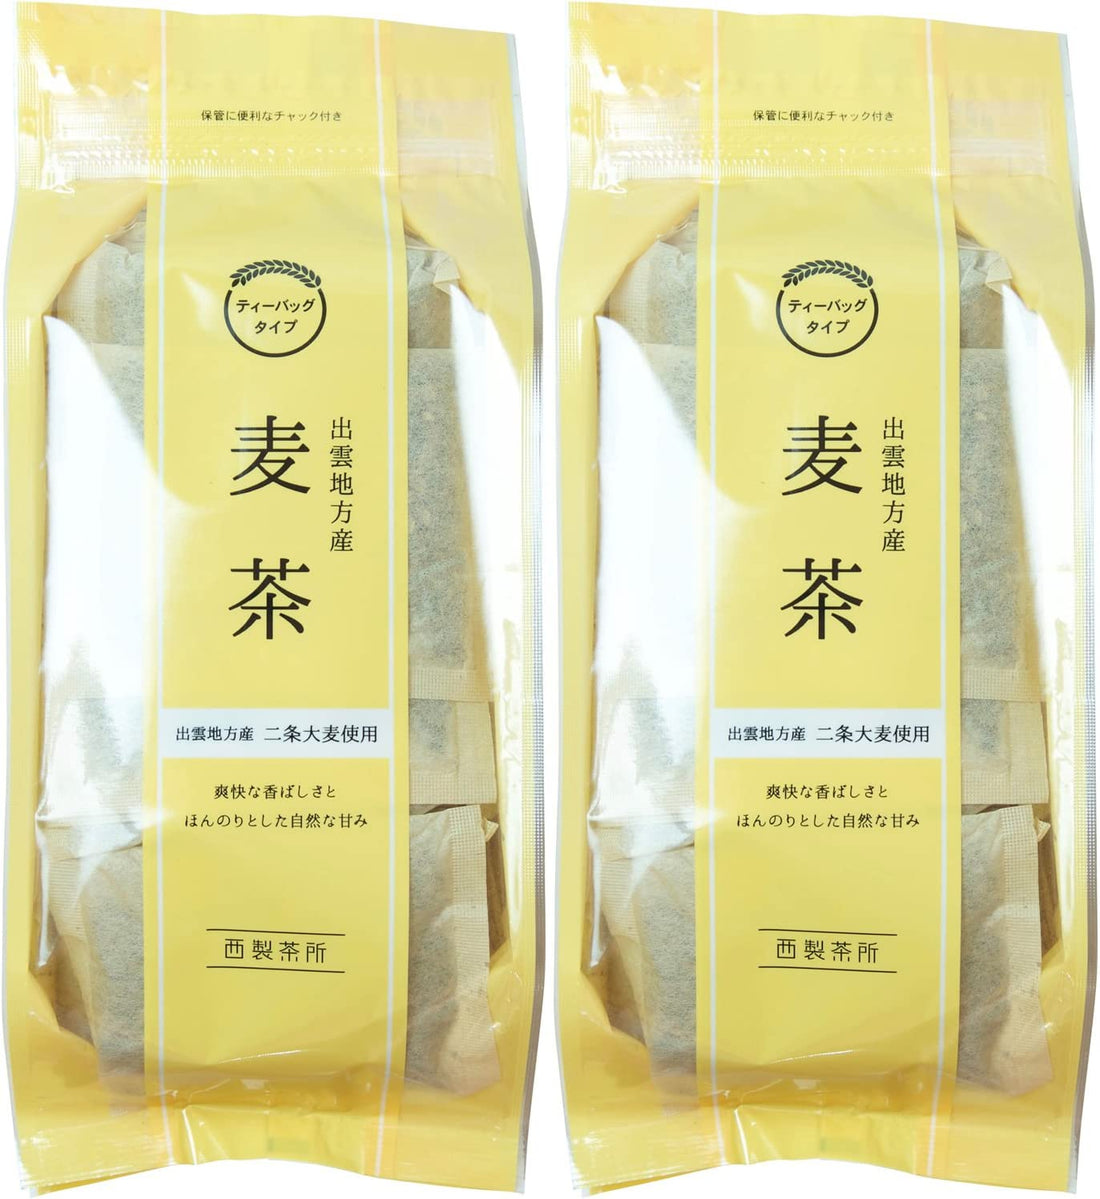 Nishi Tea Factory Nijo Barley Tea from Izumo Region (10g x 25P) x 2 Bags - NihonMura